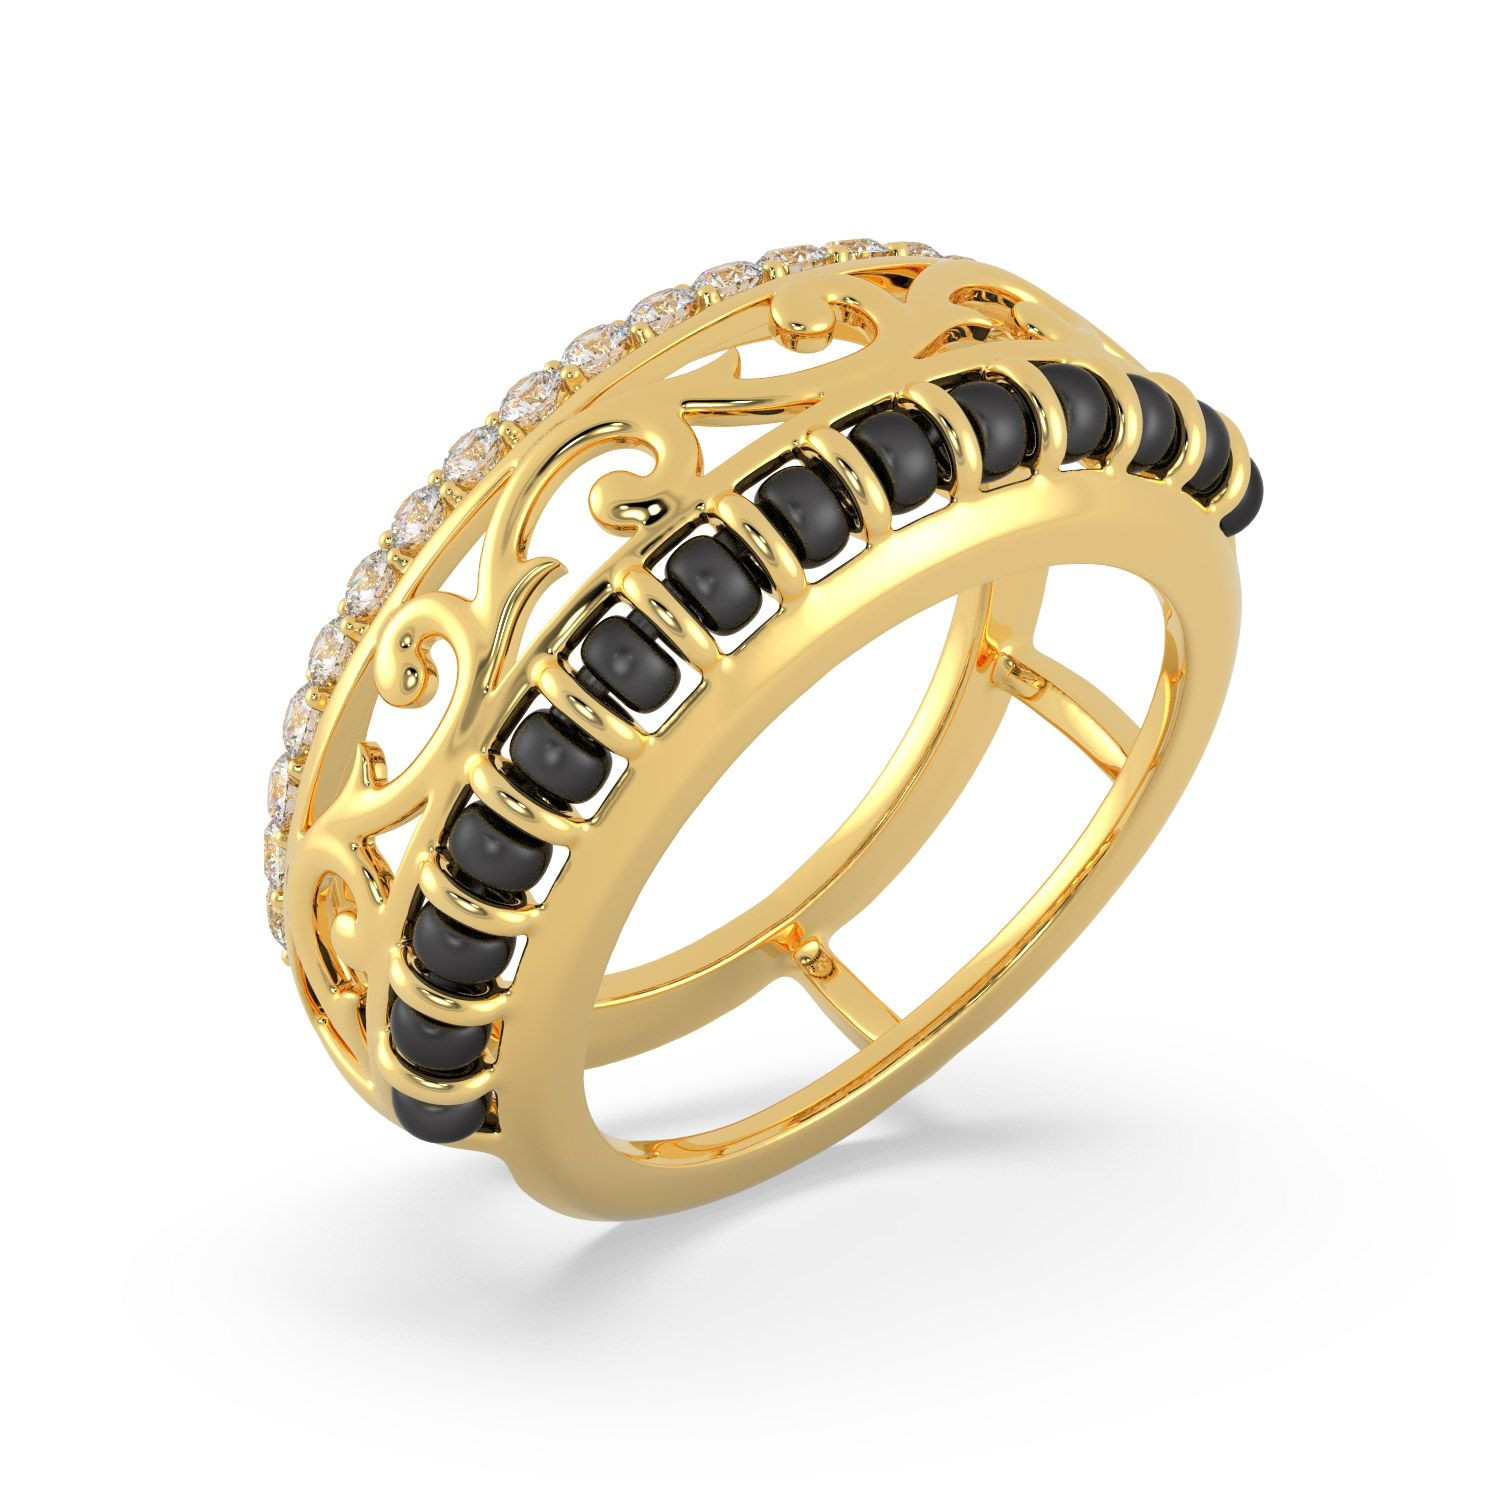 Malabar 22 KT Gold Studded Casual Ring ECRGSGDZ019